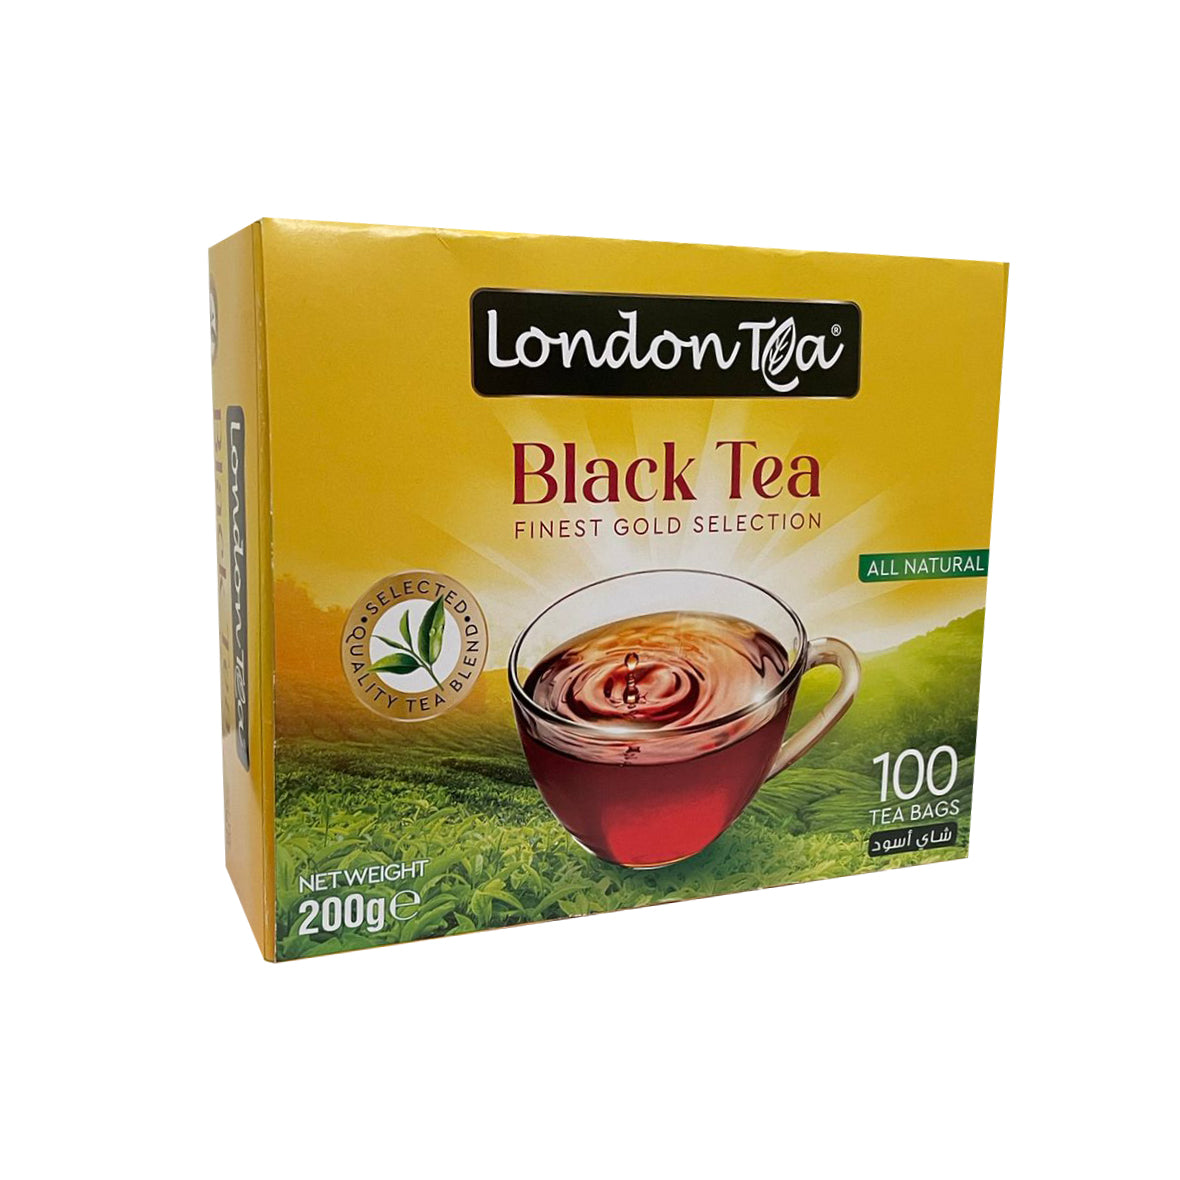 London Tea Black Tea -100 bags